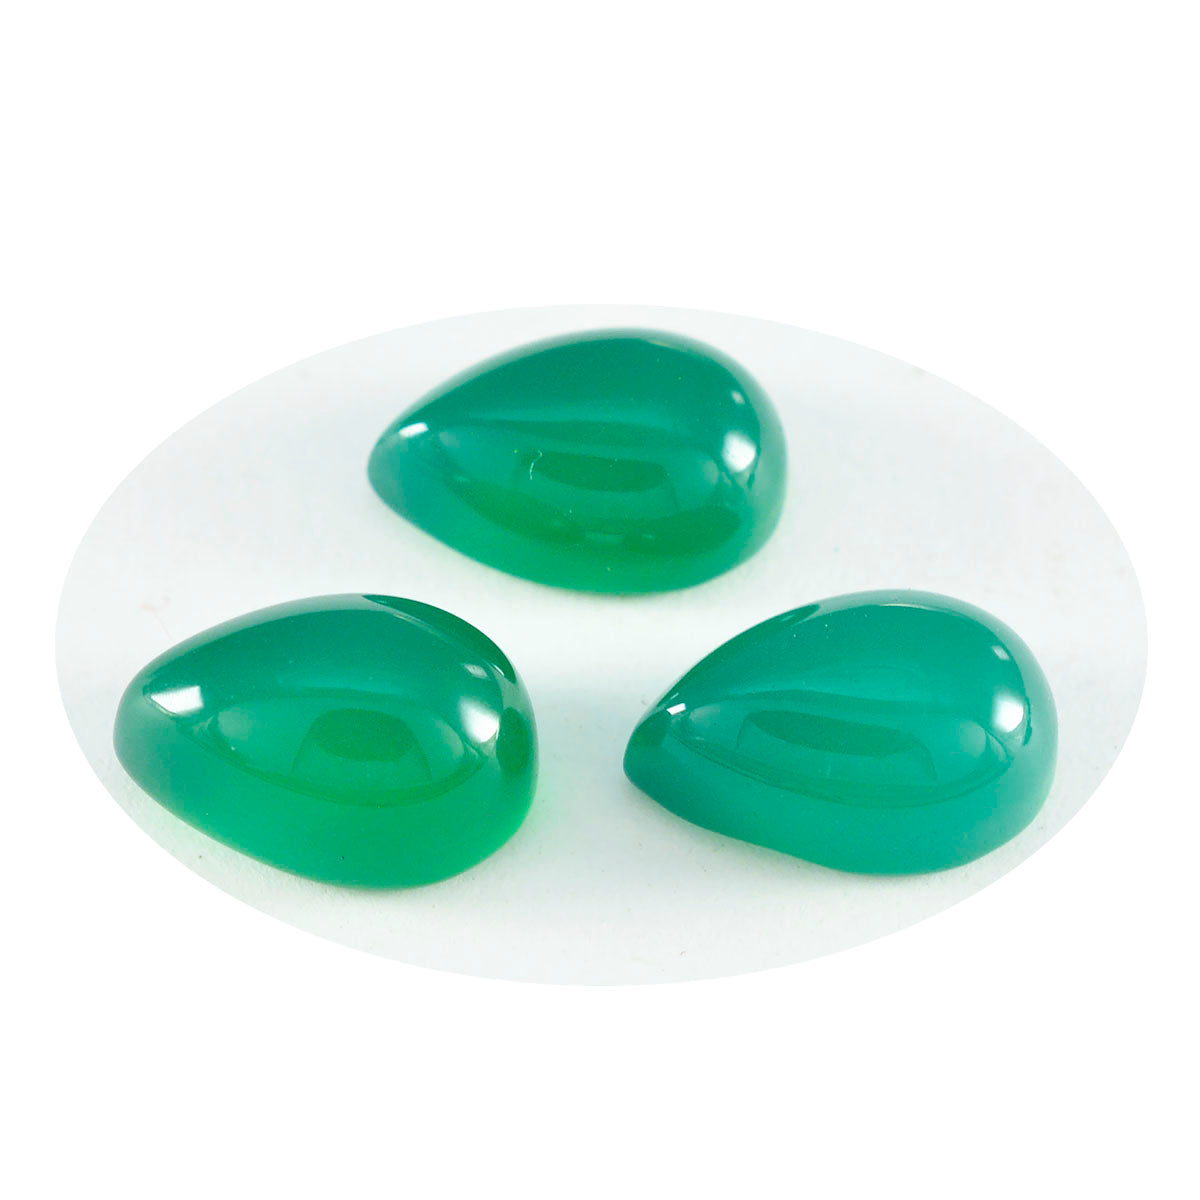 riyogems 1 st grön onyx cabochon 7x10 mm päronform härlig kvalitetsädelsten